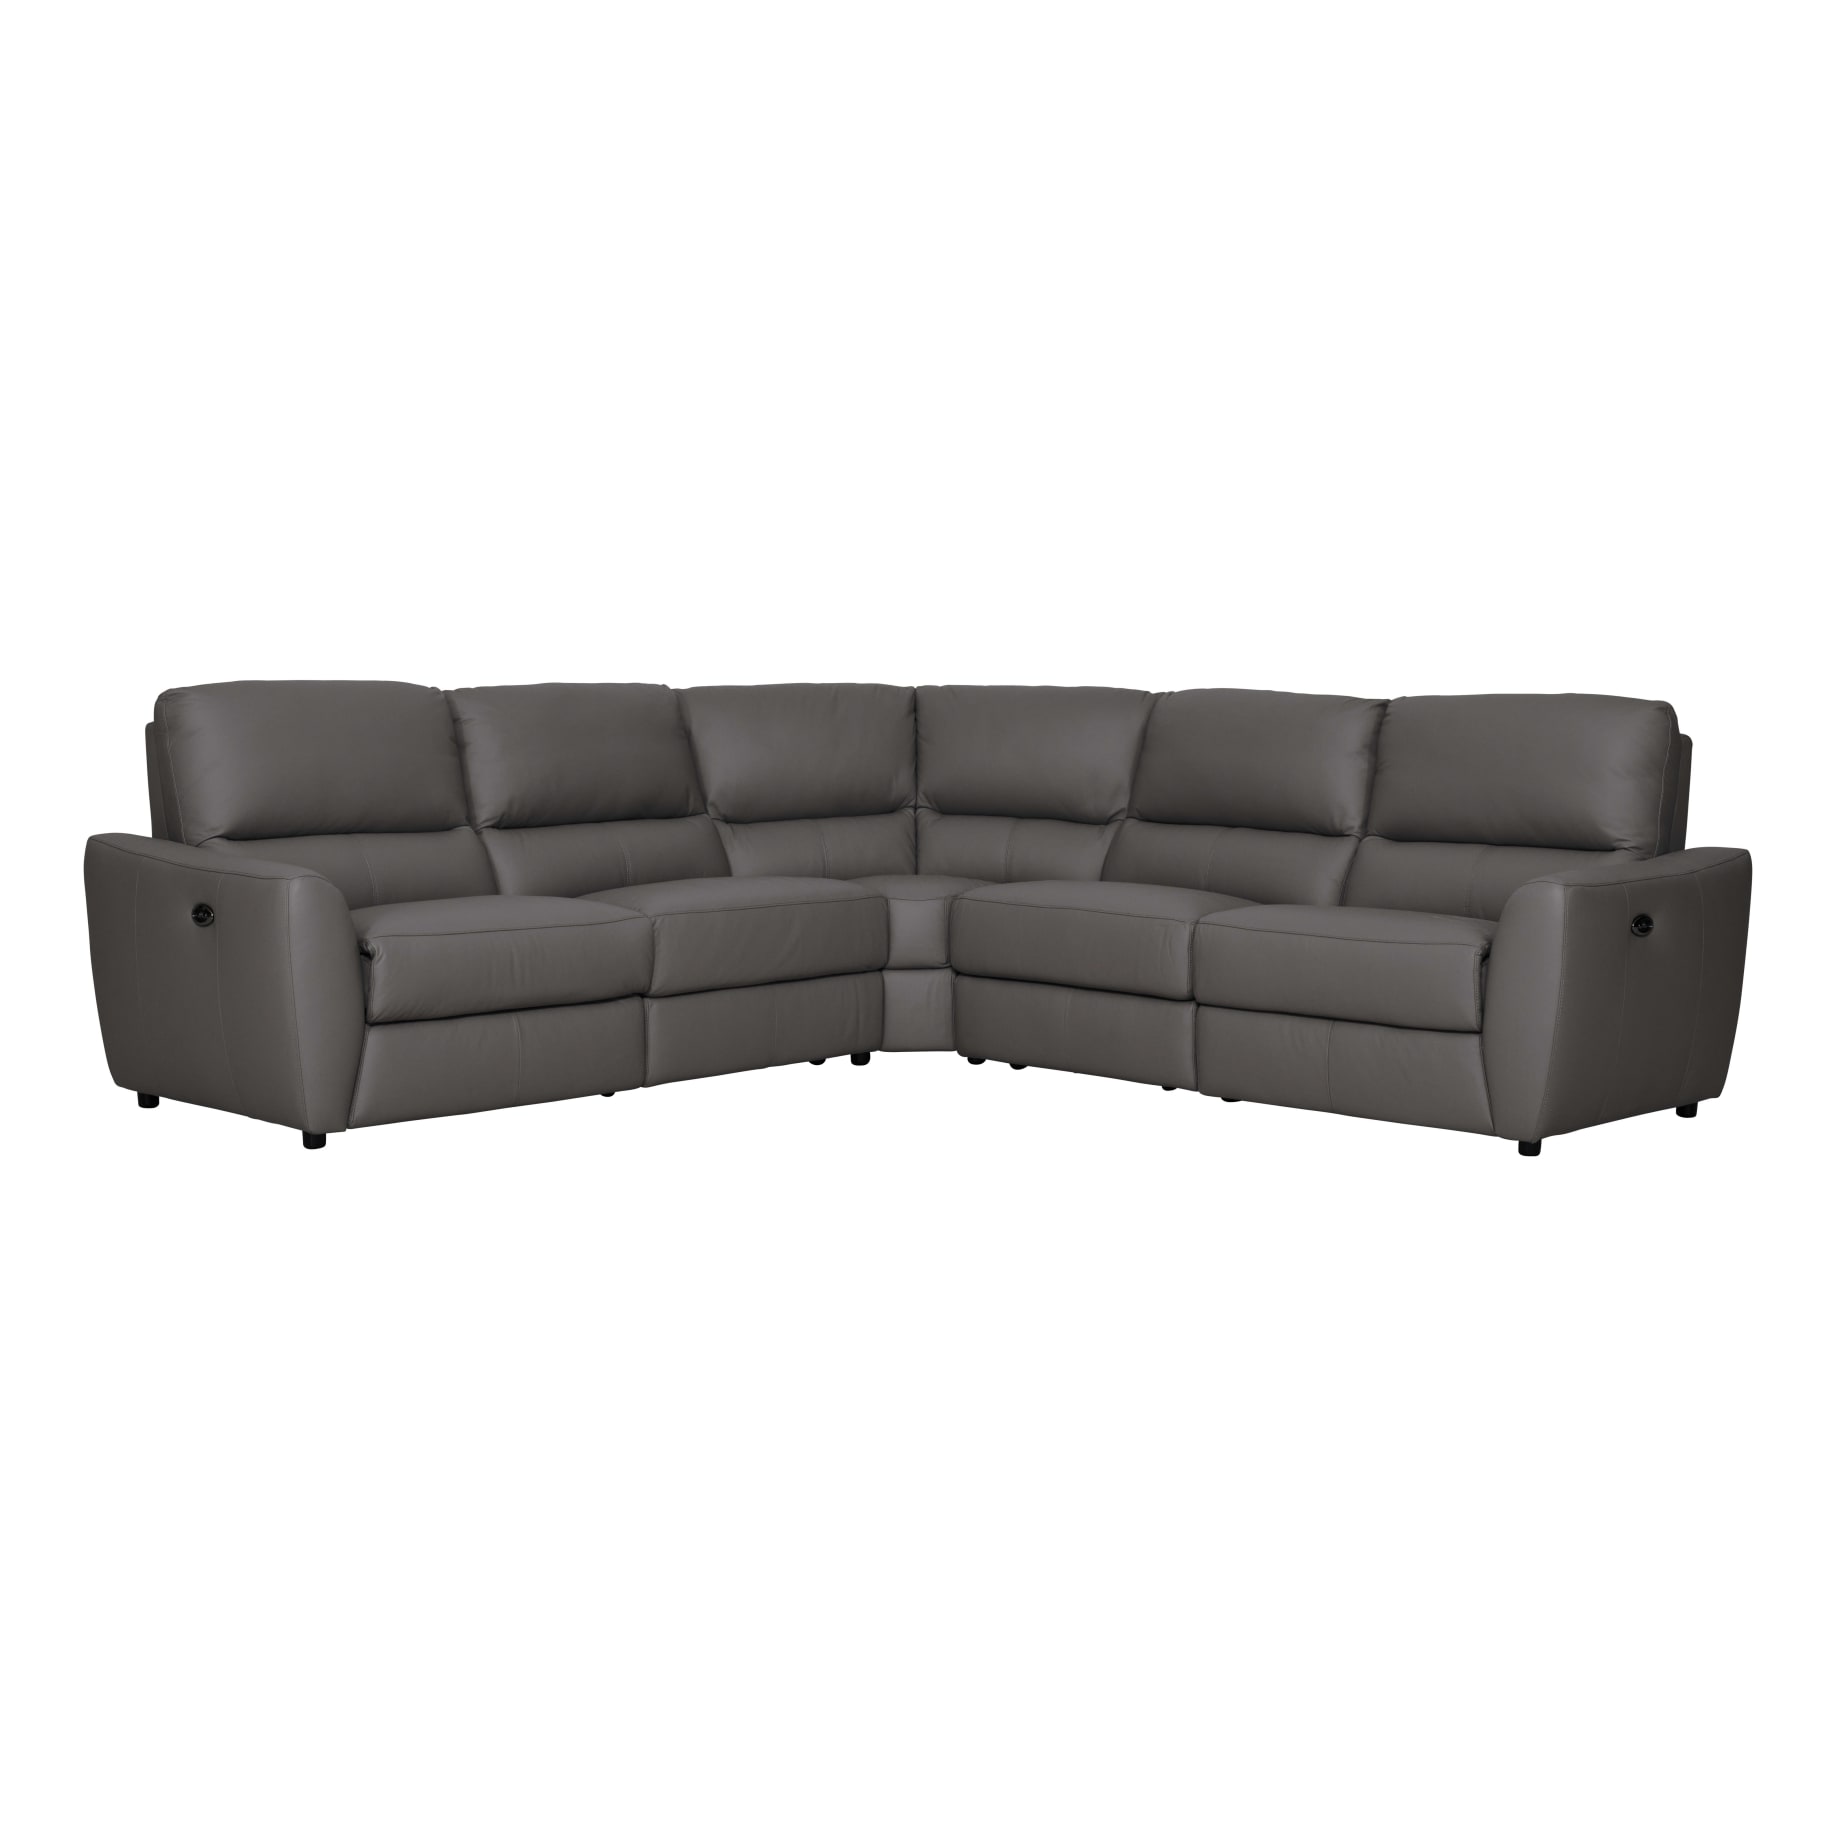 Portland Modular Sofa with 2 Recliners in Leather Dark Grey